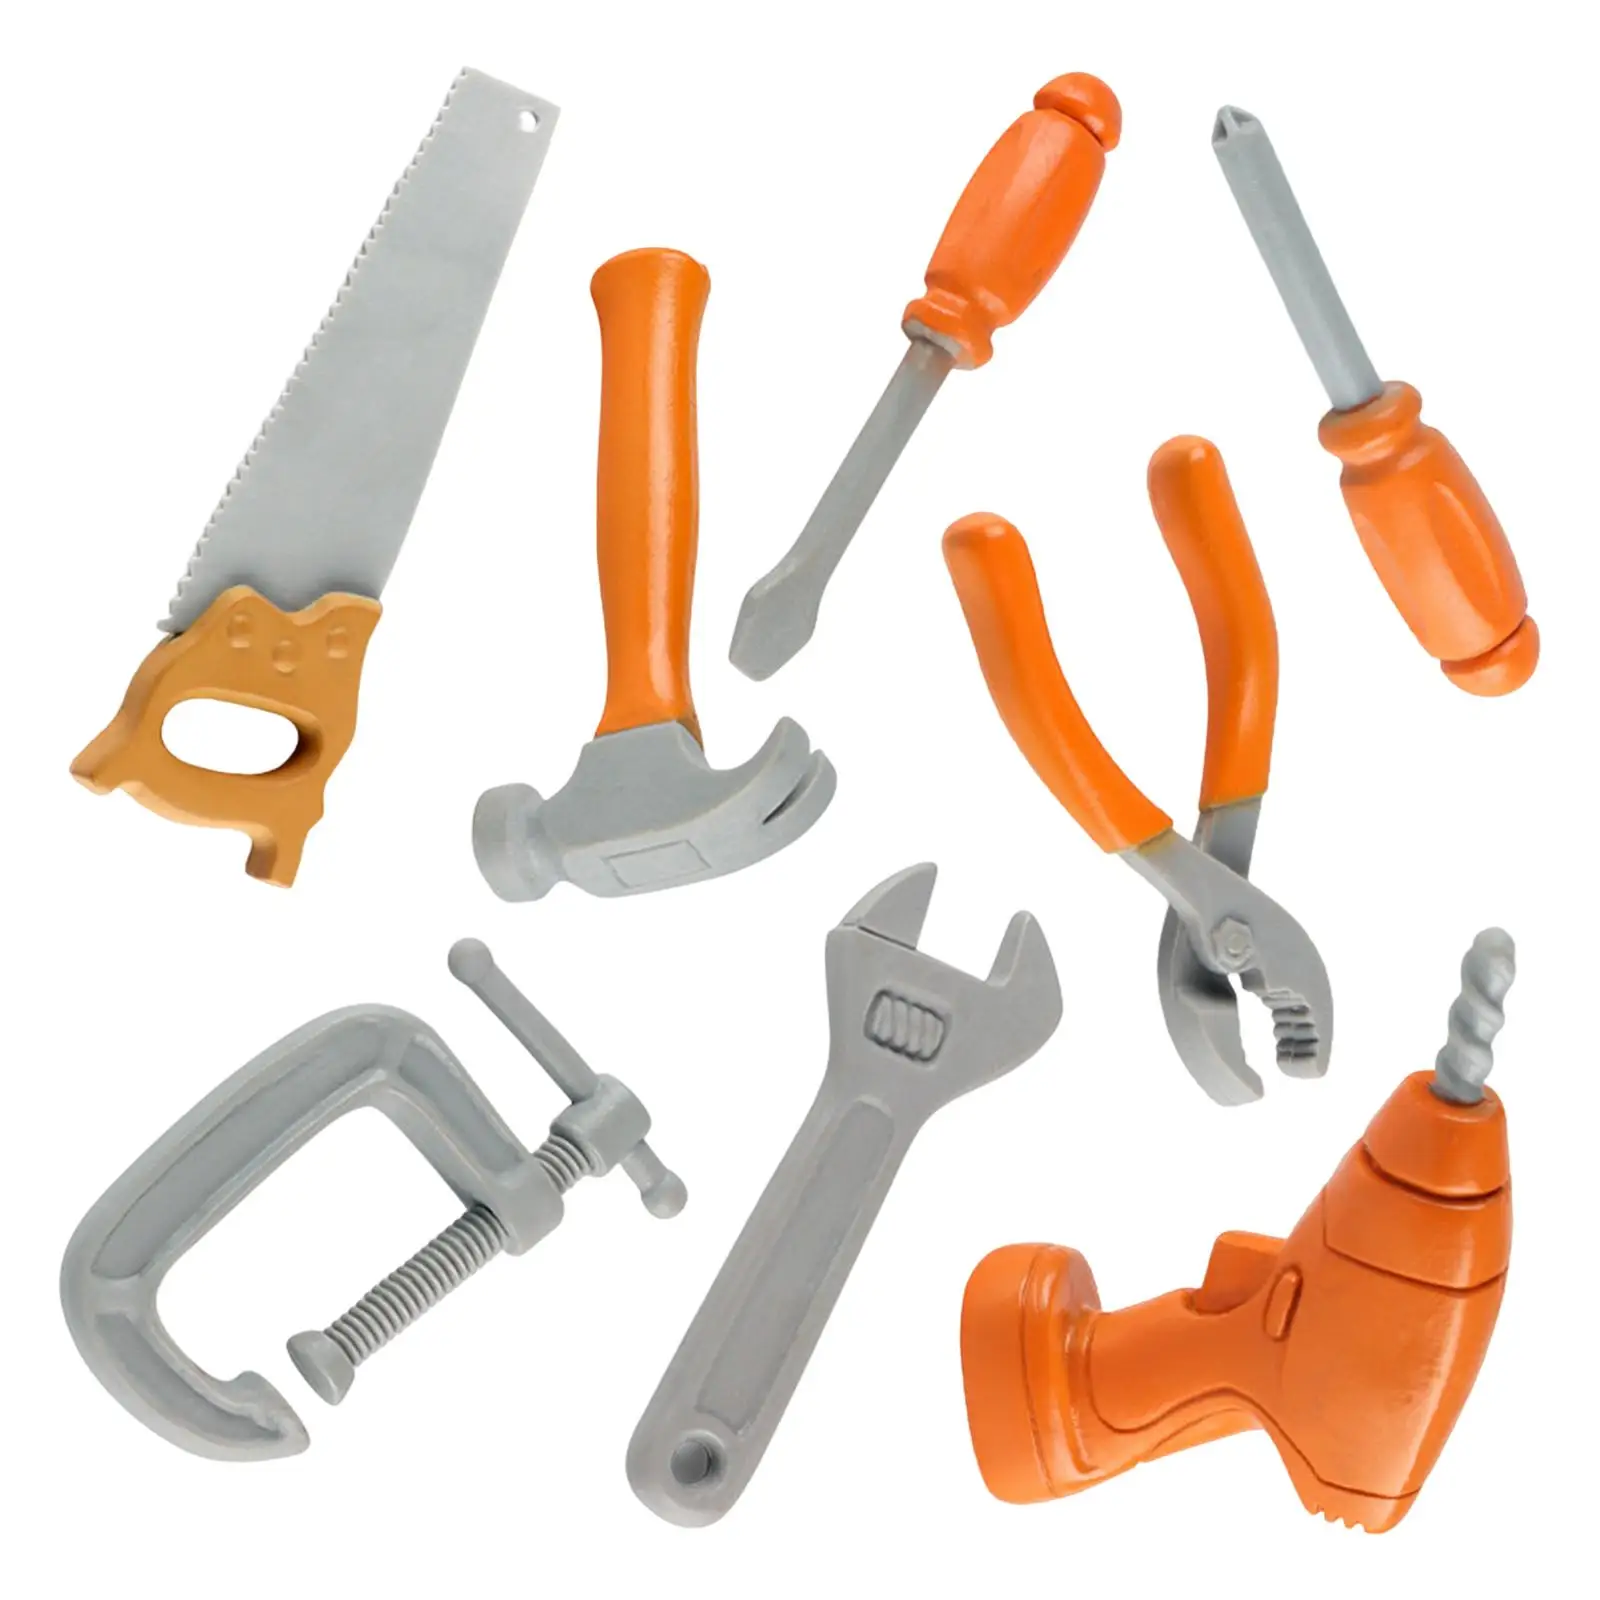 8Pcs Workshop Toy Tools Set, Construction Hand Tool, Kids Play Tool Set Pretend Play Accessory